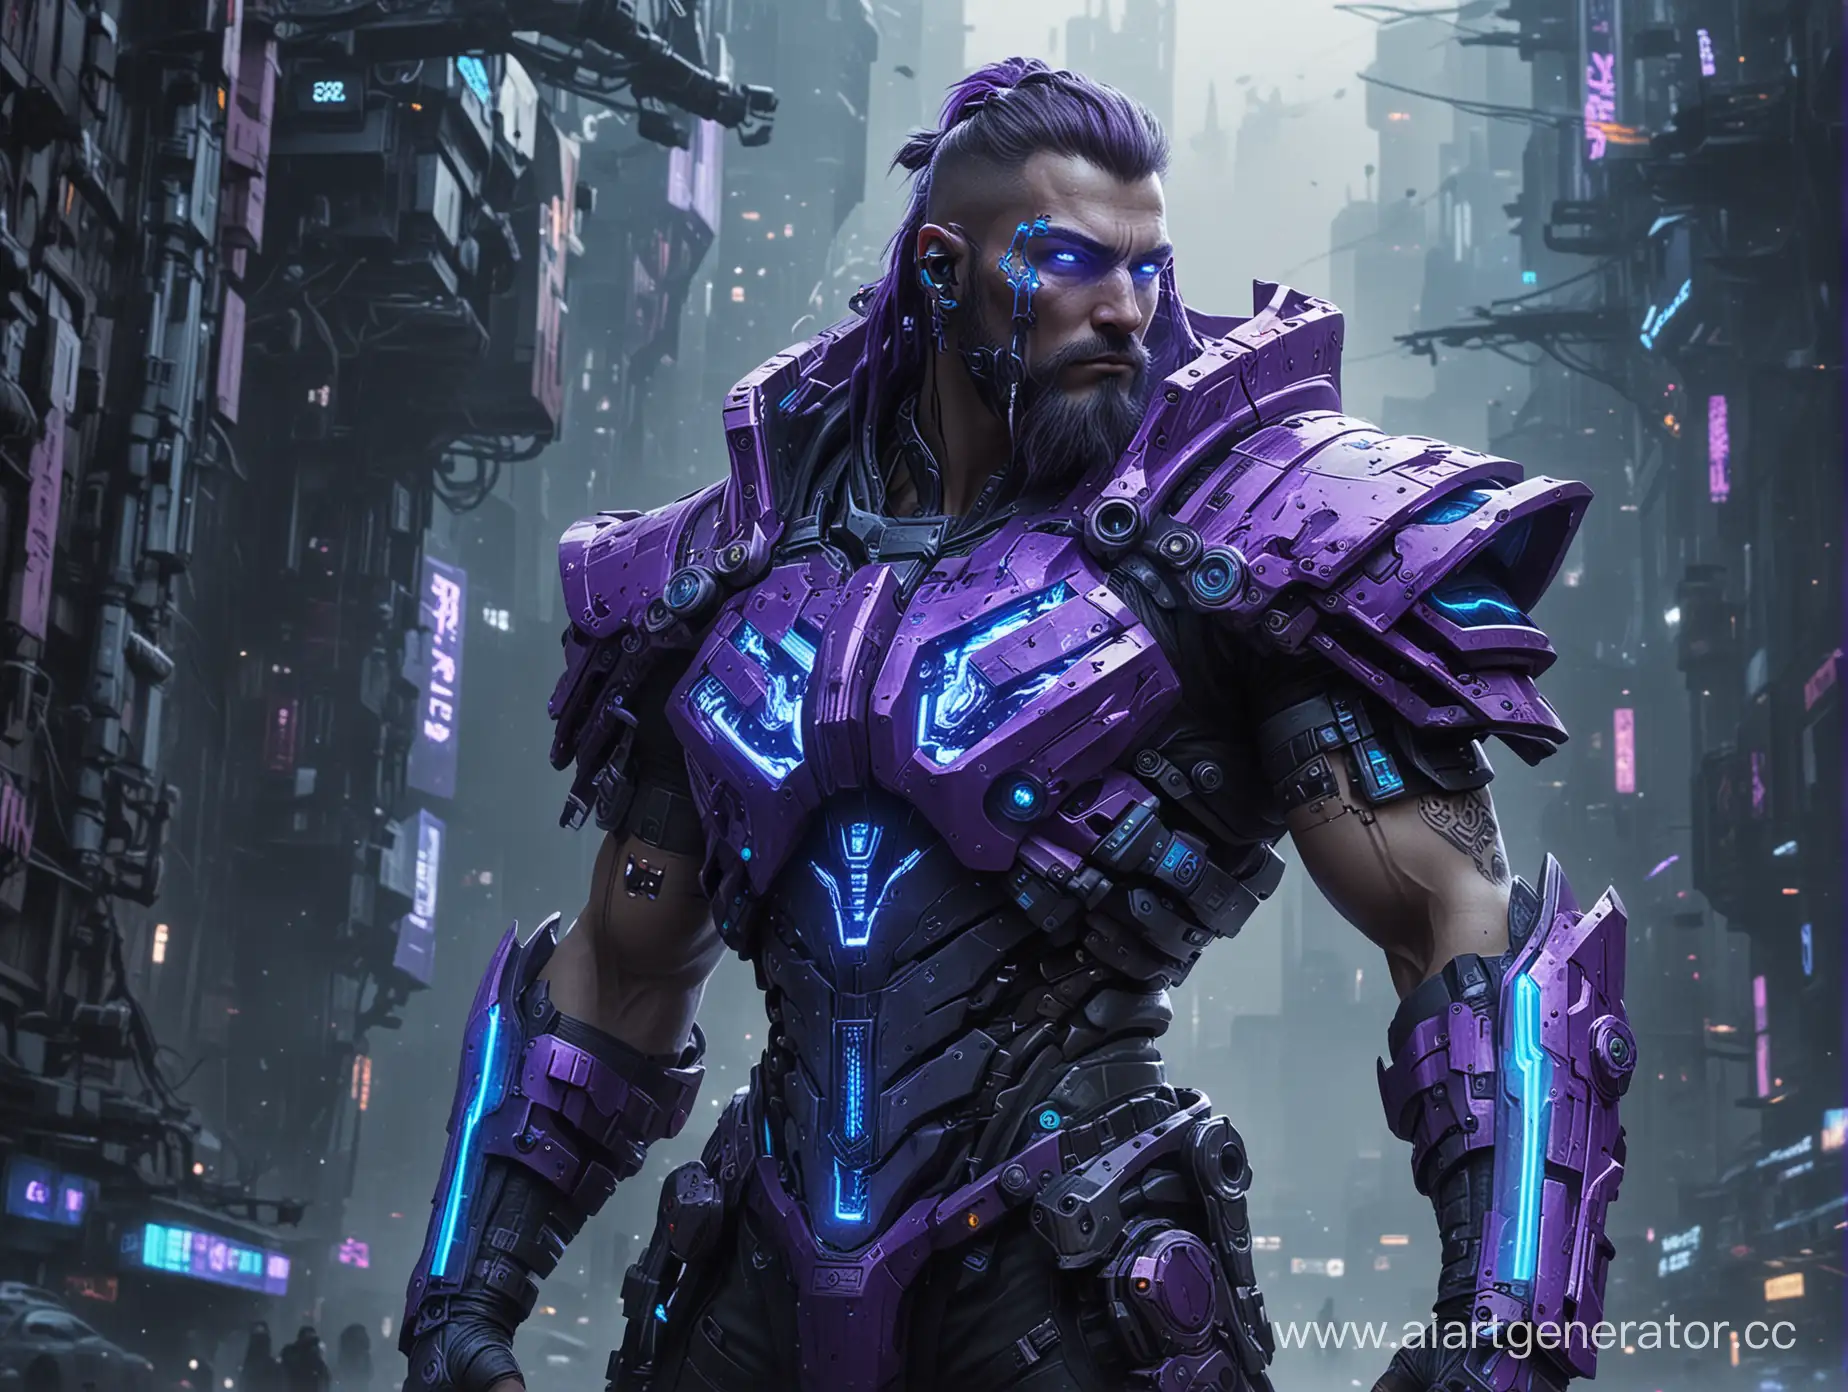 Cyberpunk-Bogatyr-in-Purple-and-Blue